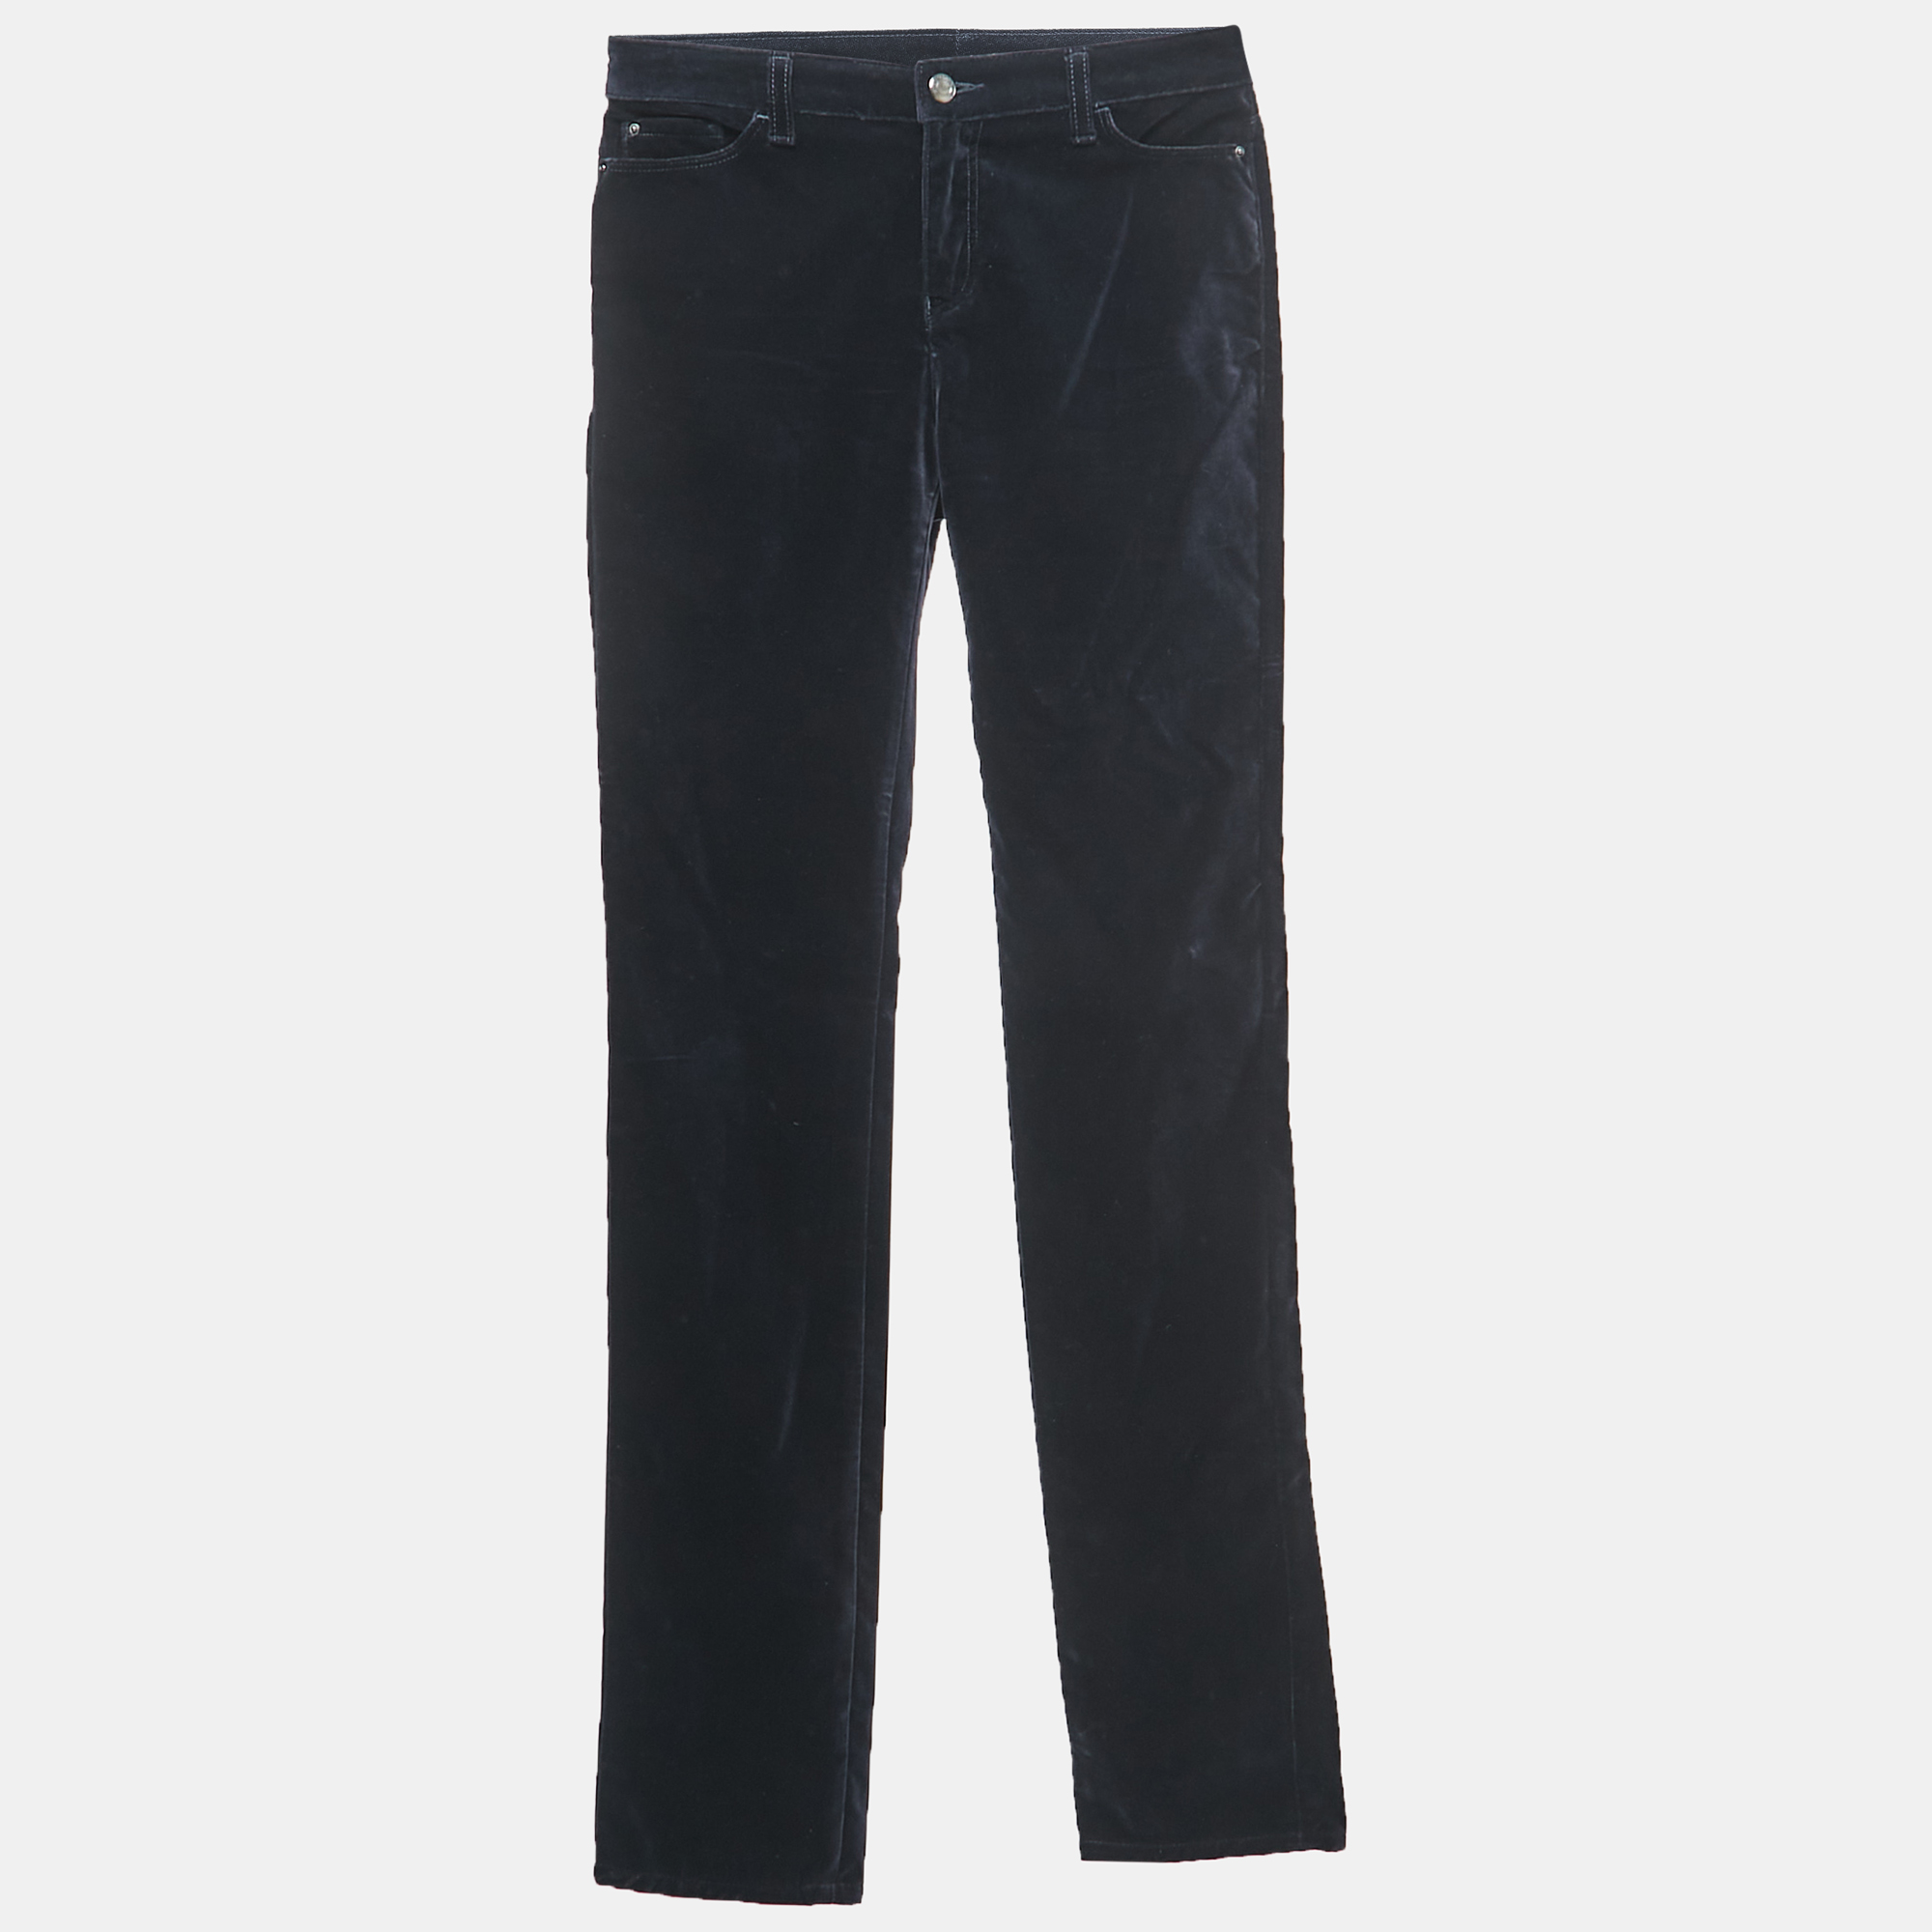 Pre-owned Emporio Armani Navy Blue Velvet Jeans S Waist 26"